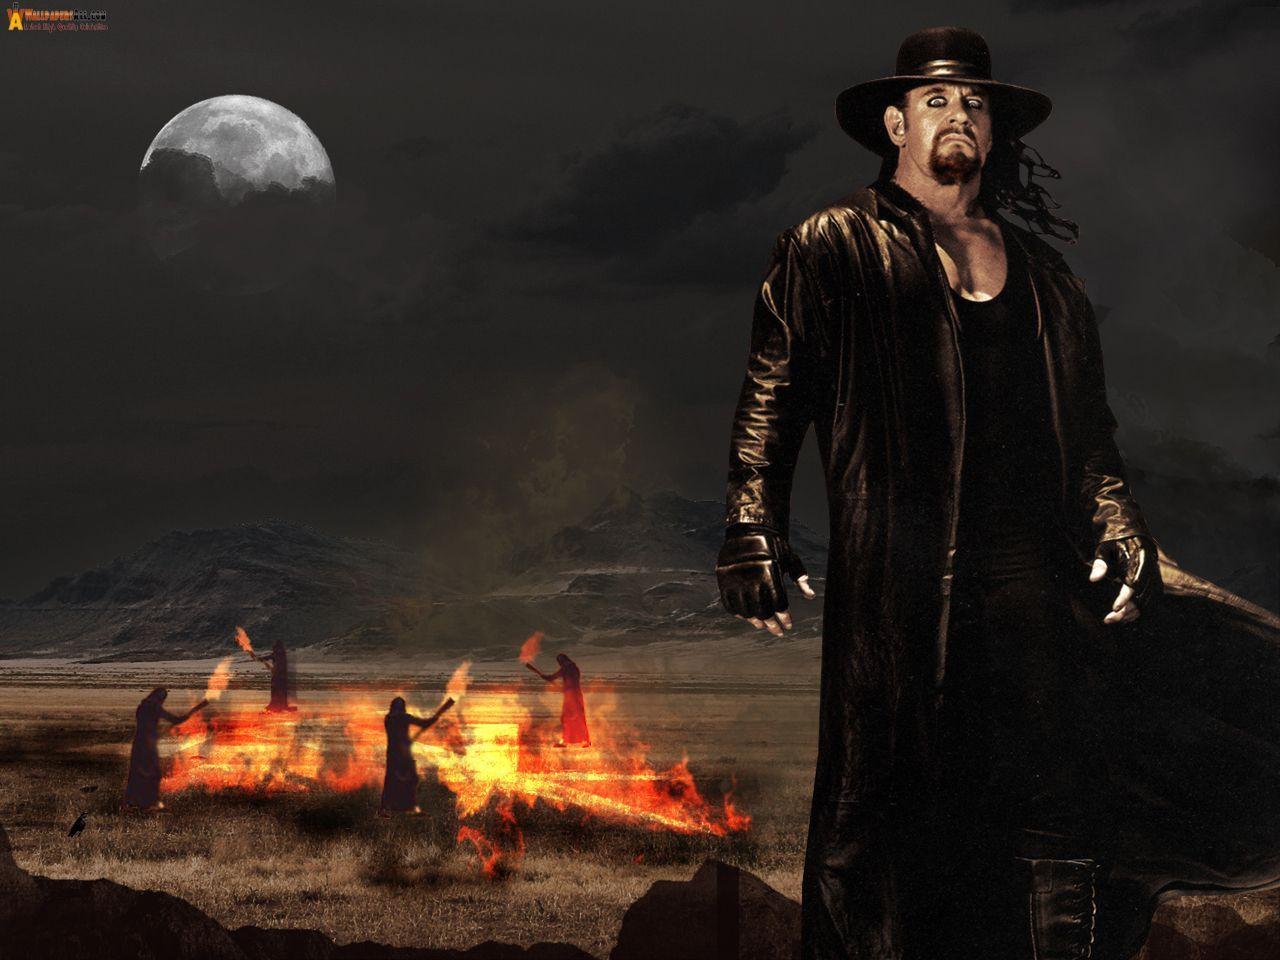 Wonderful Wallpaper: The Undertaker HD Wallpaper 2013 2014